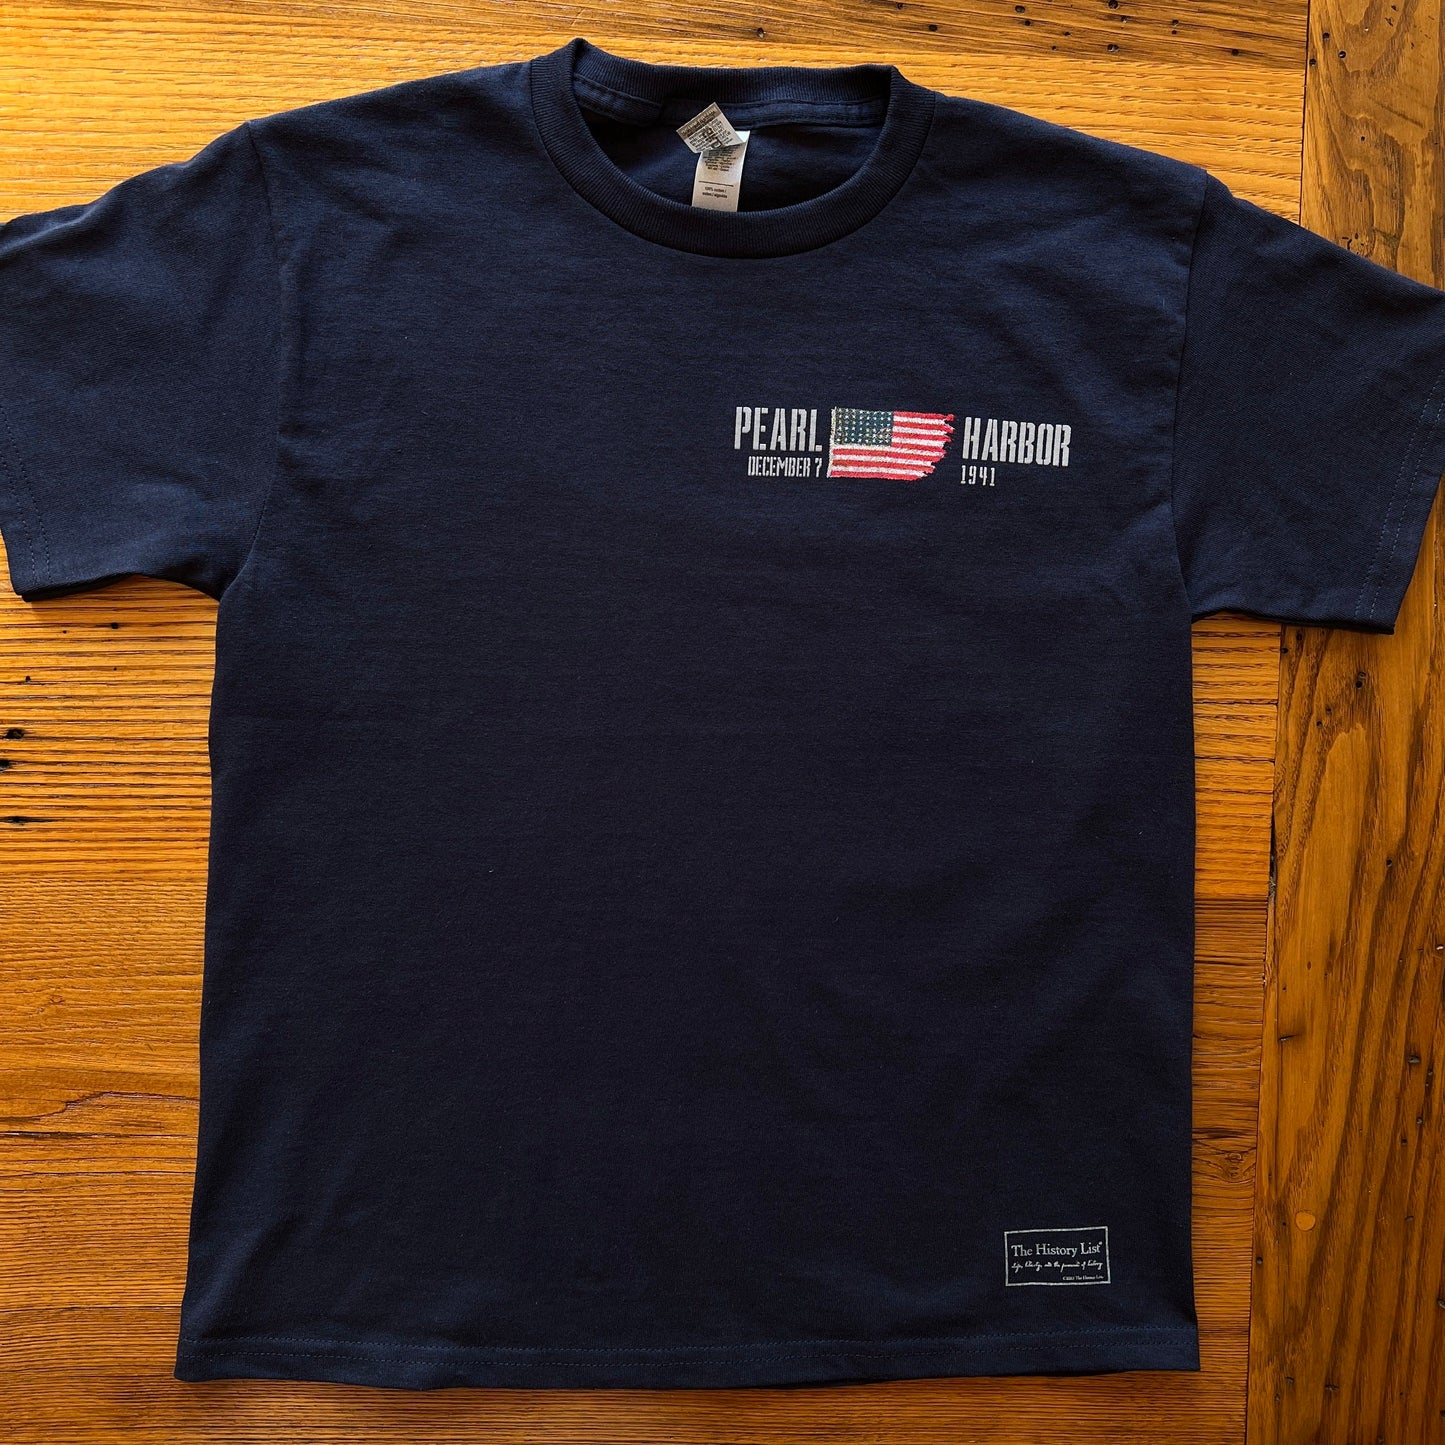 Pearl Harbor “Battleship Row” Shirt in Youth sizes